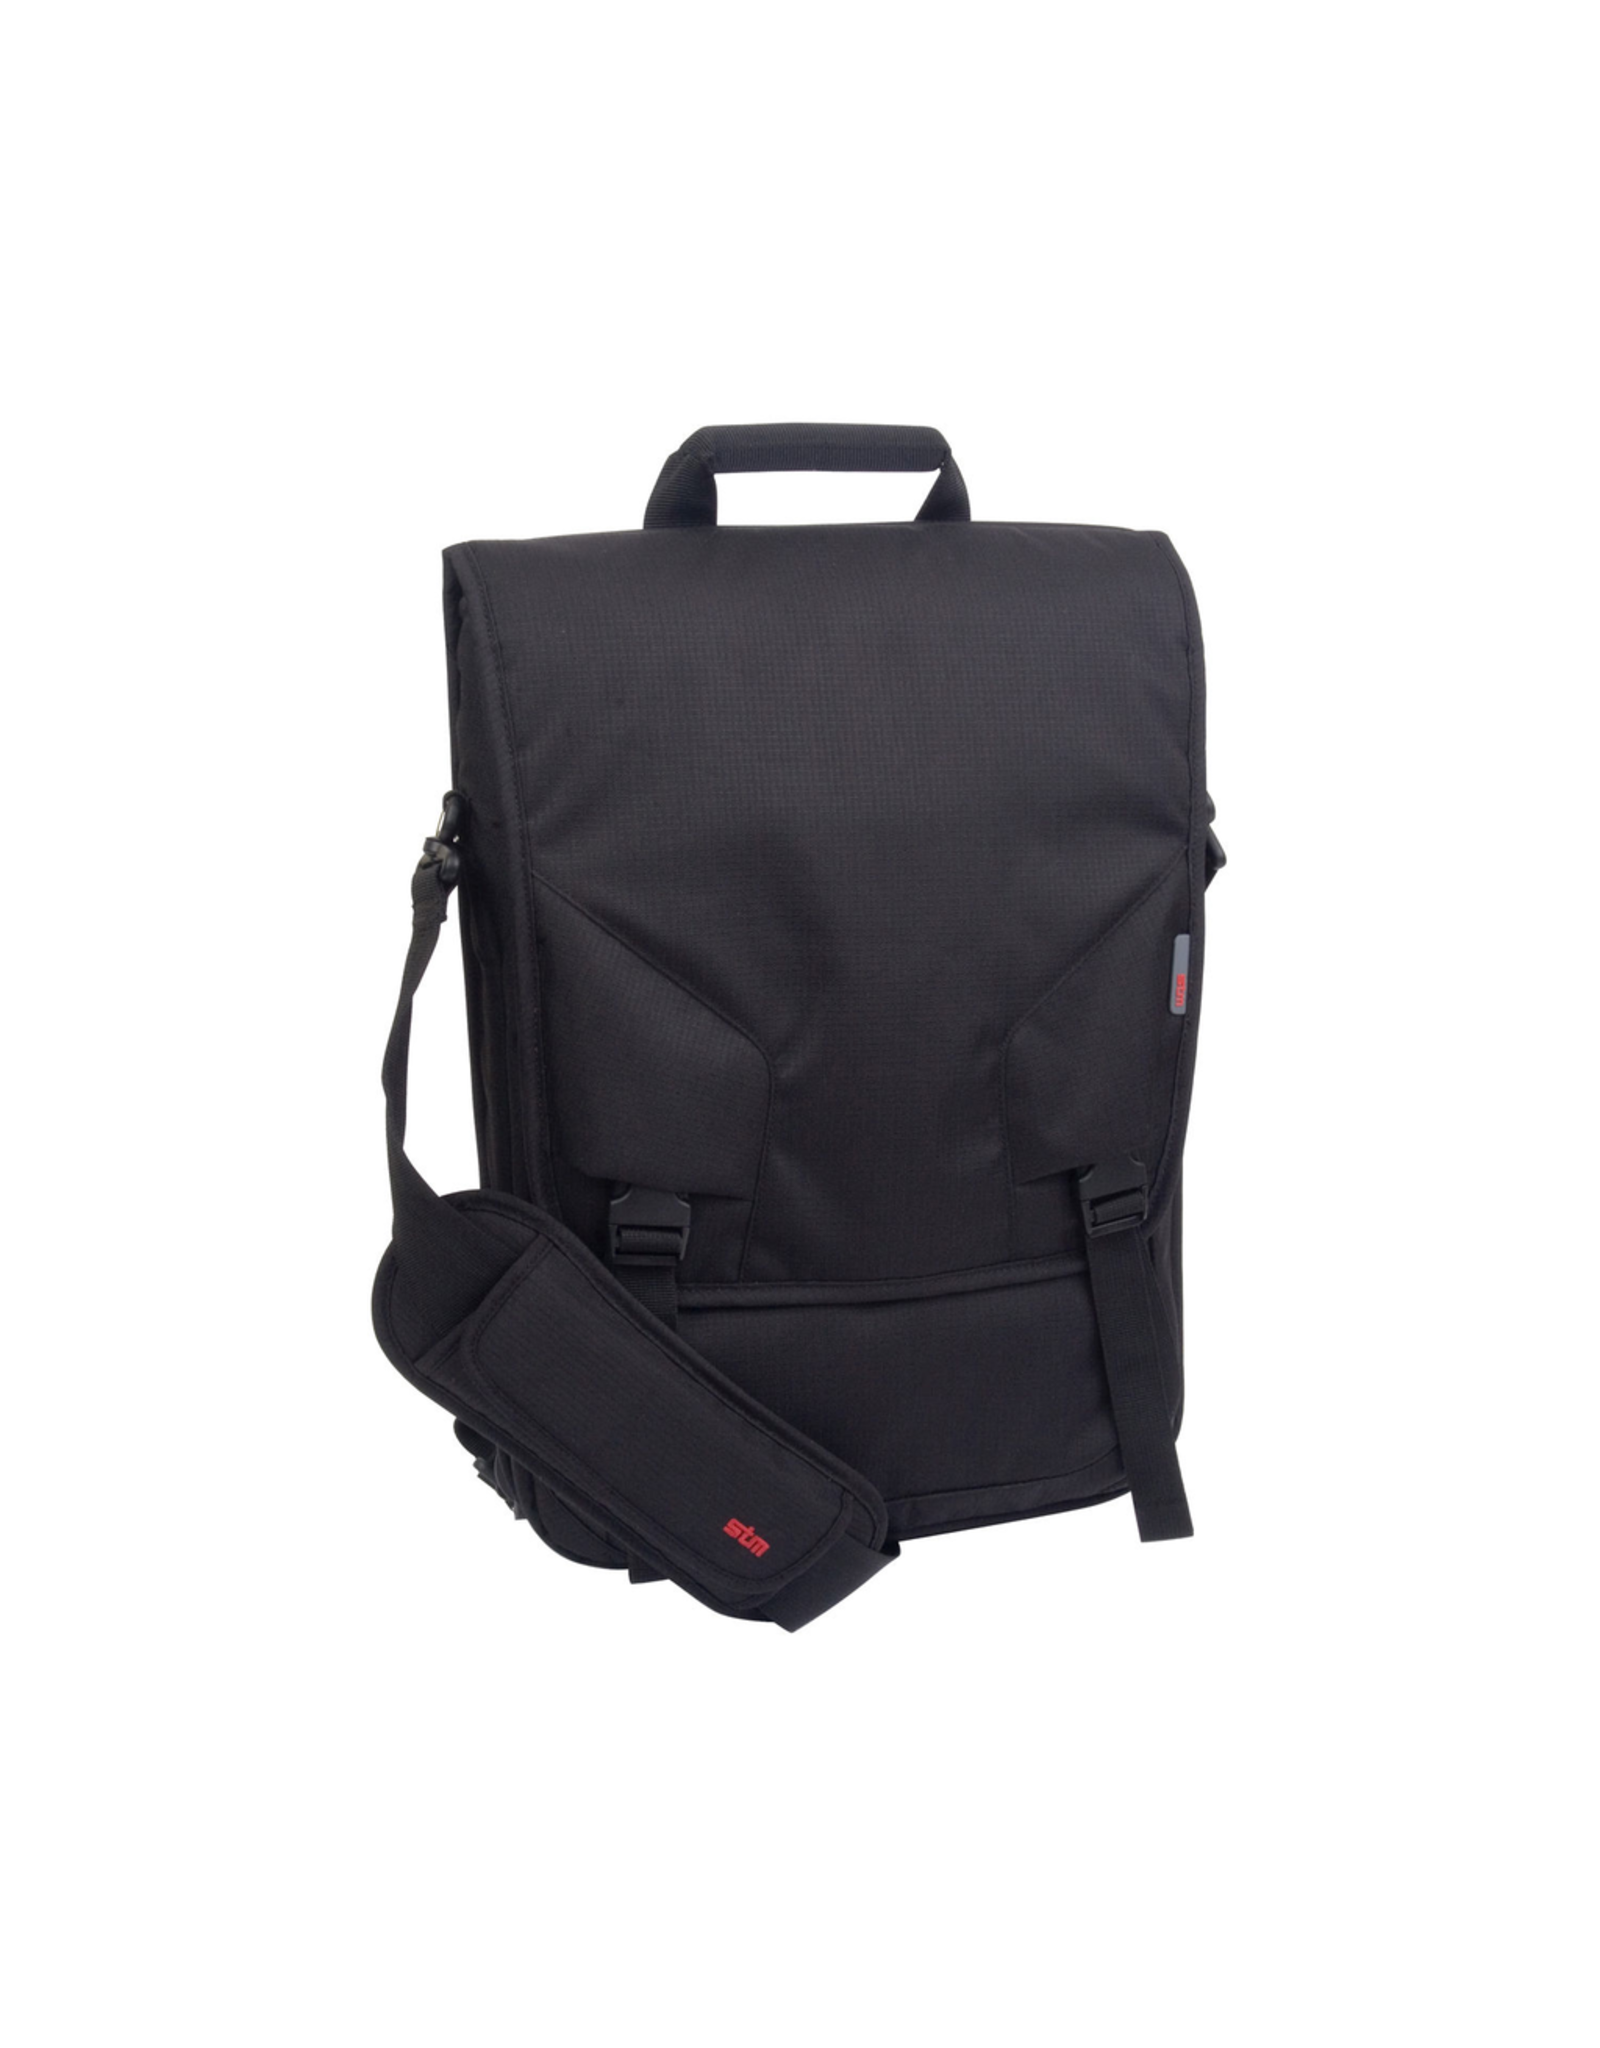 STM STM Switch Laptop Backpack suits 13”/15”/17” MacBook/Pro - Black